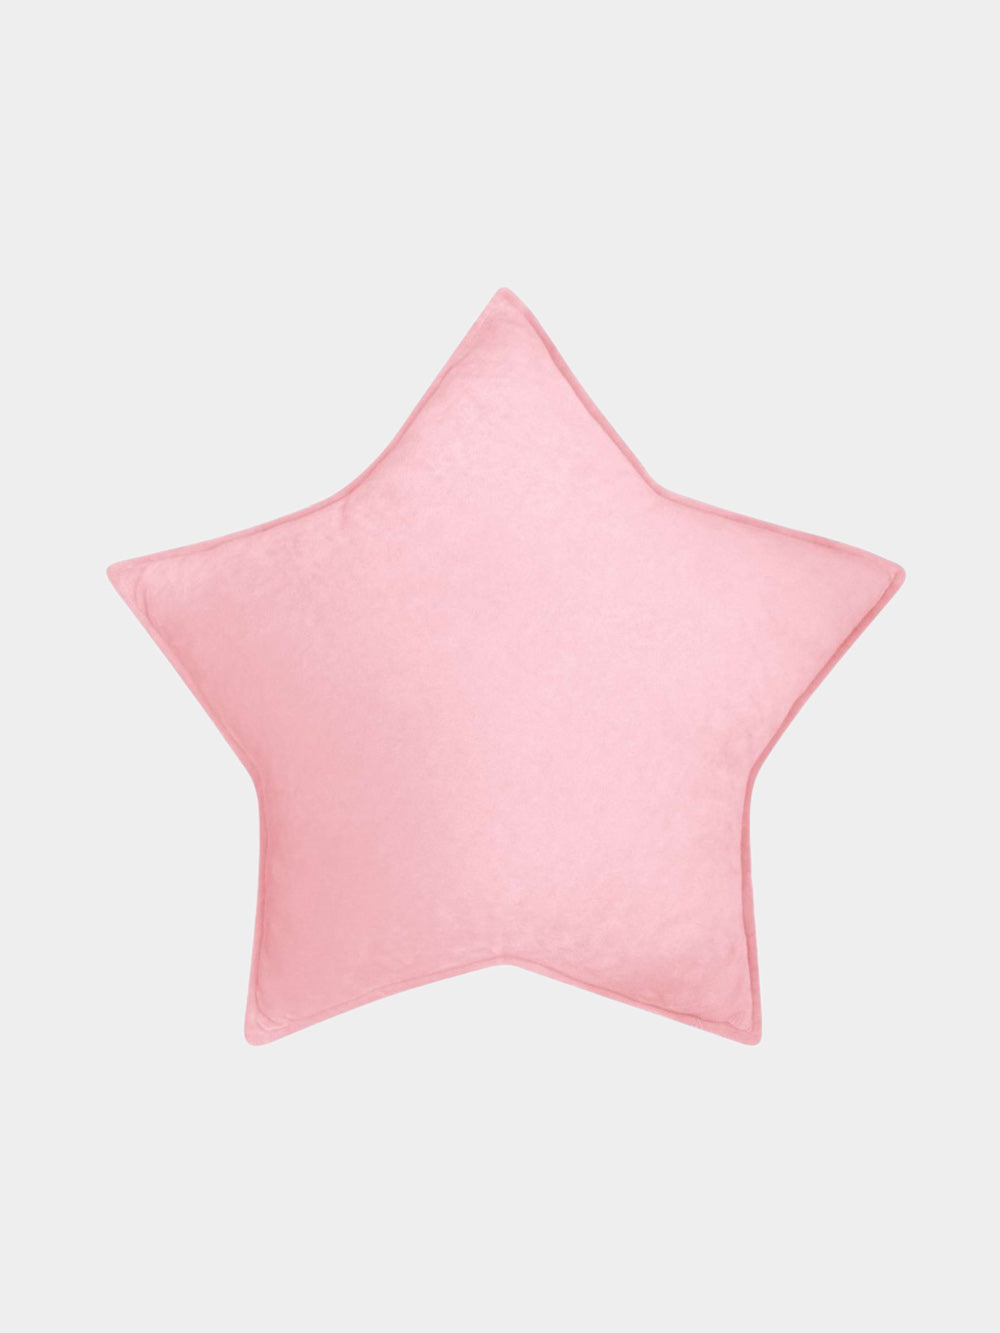 Personalised Star Cushion